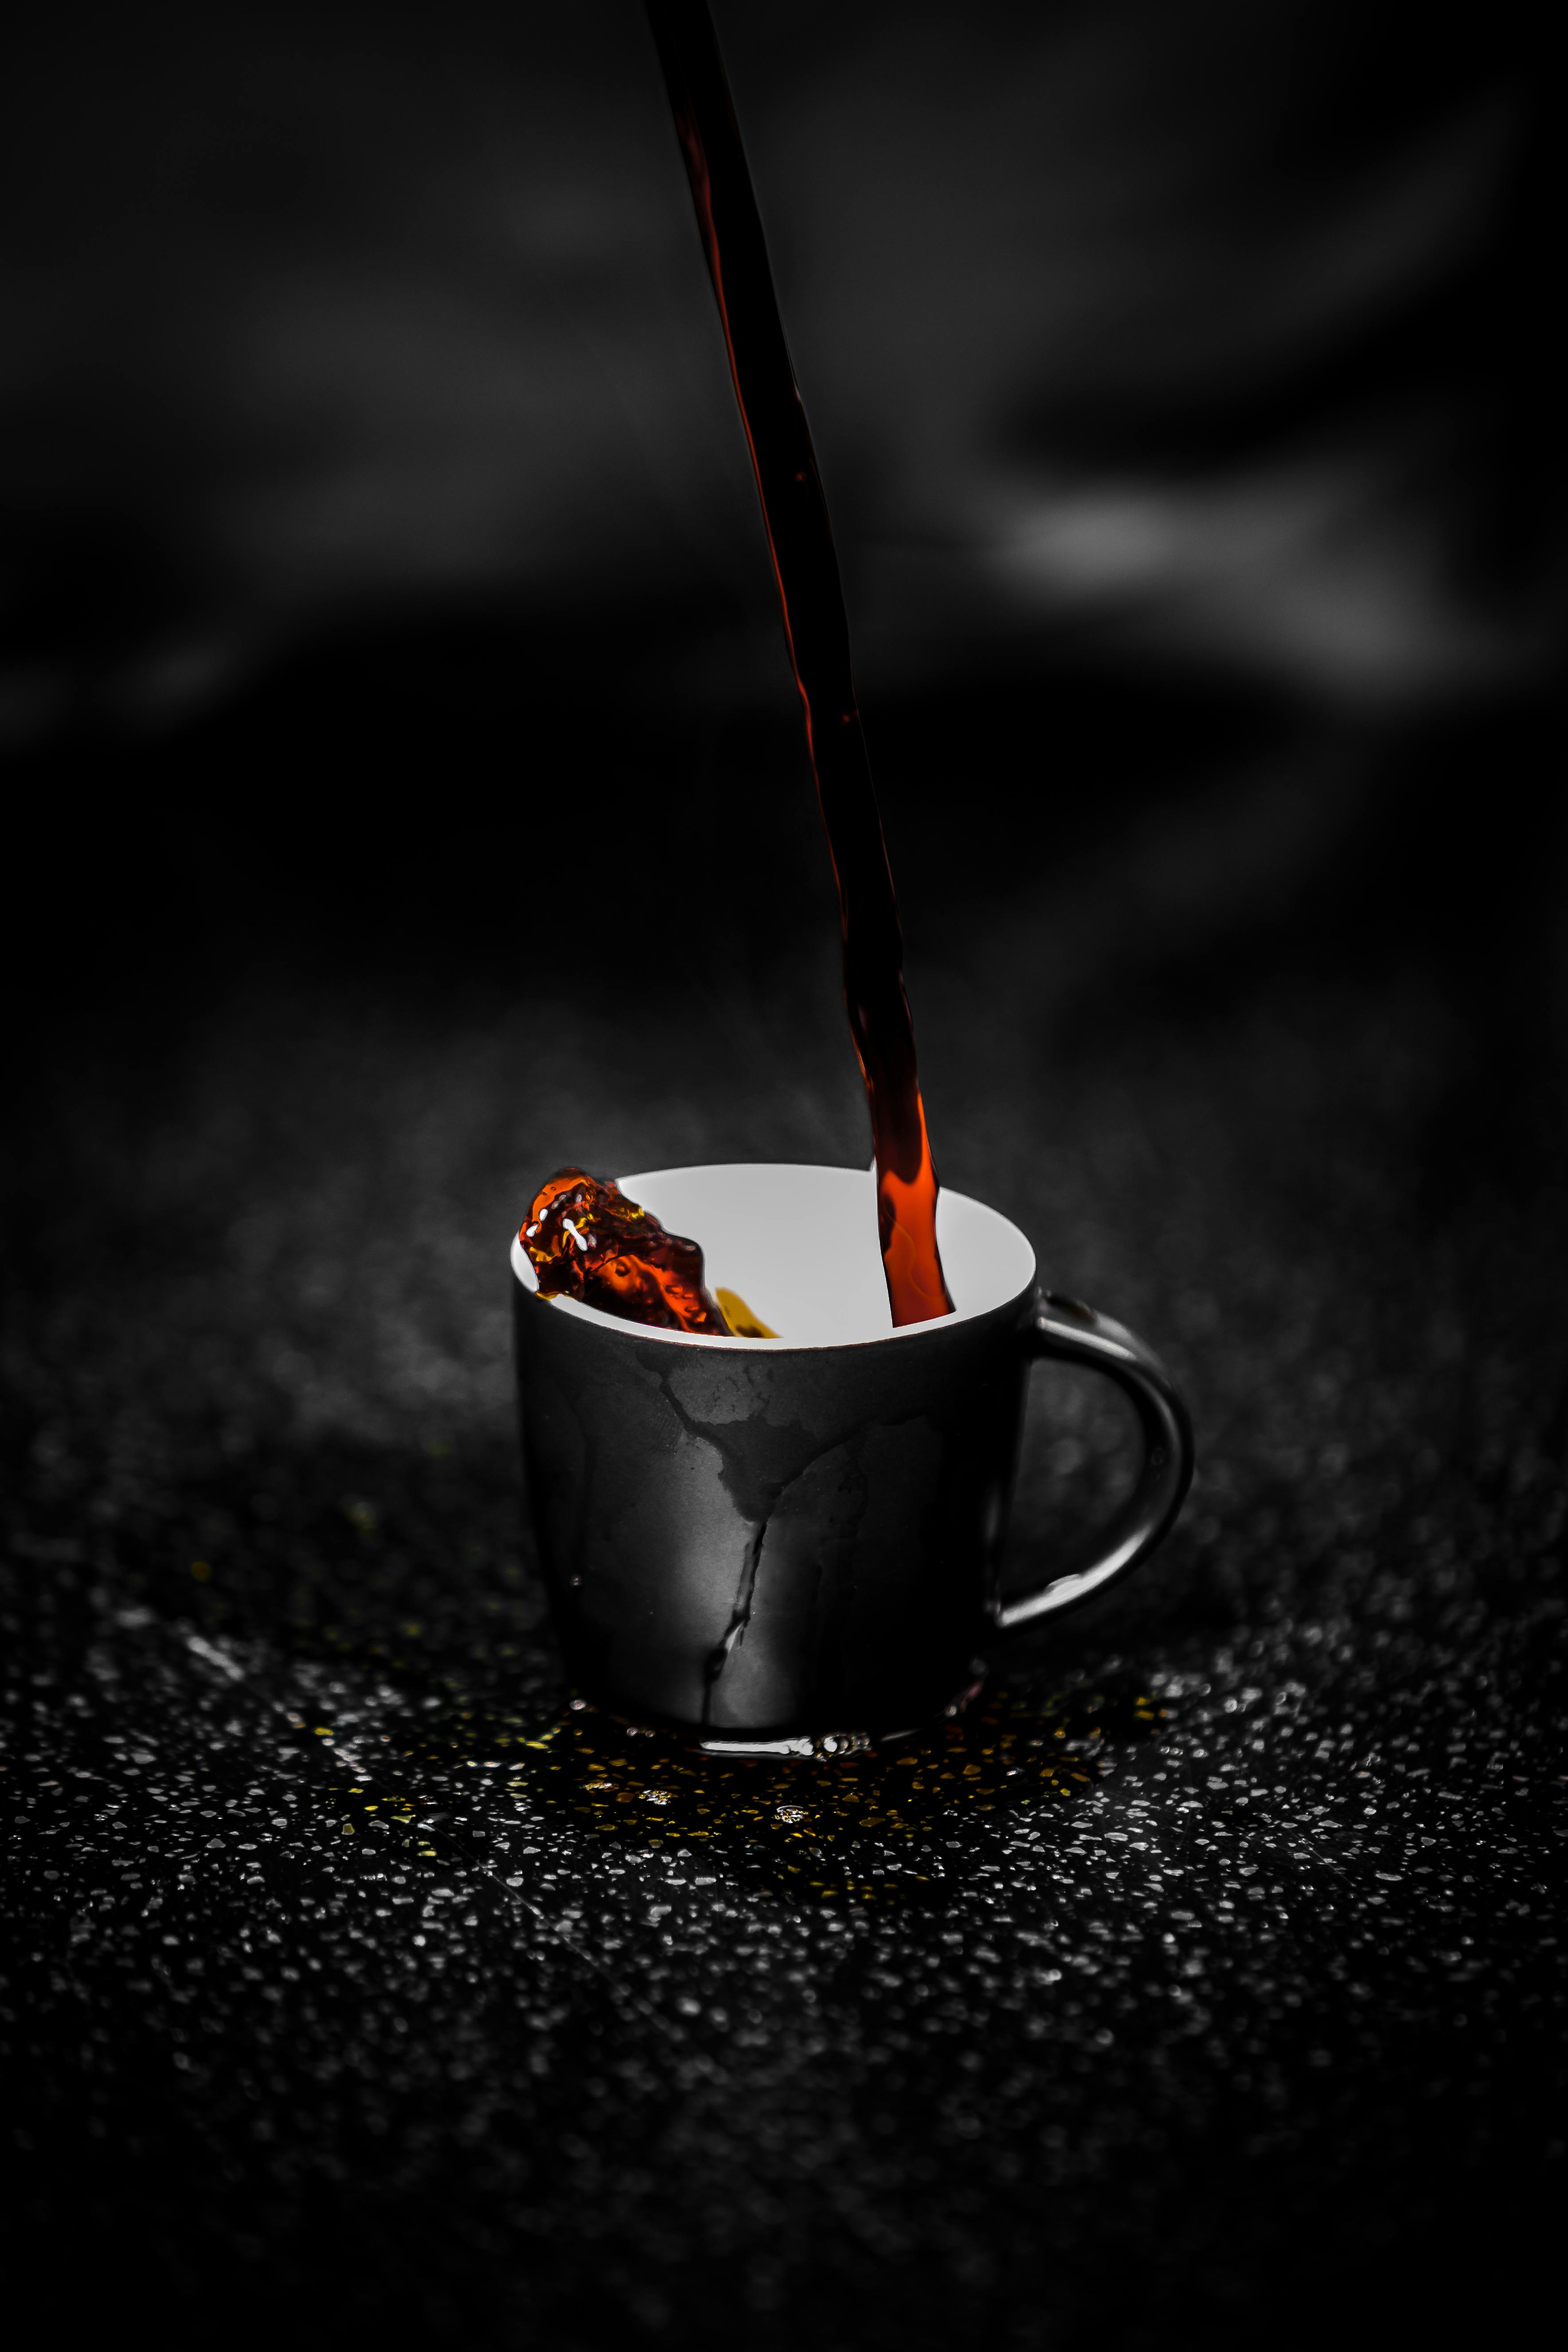 Coffee Mug Photos, Download The BEST Free Coffee Mug Stock Photos